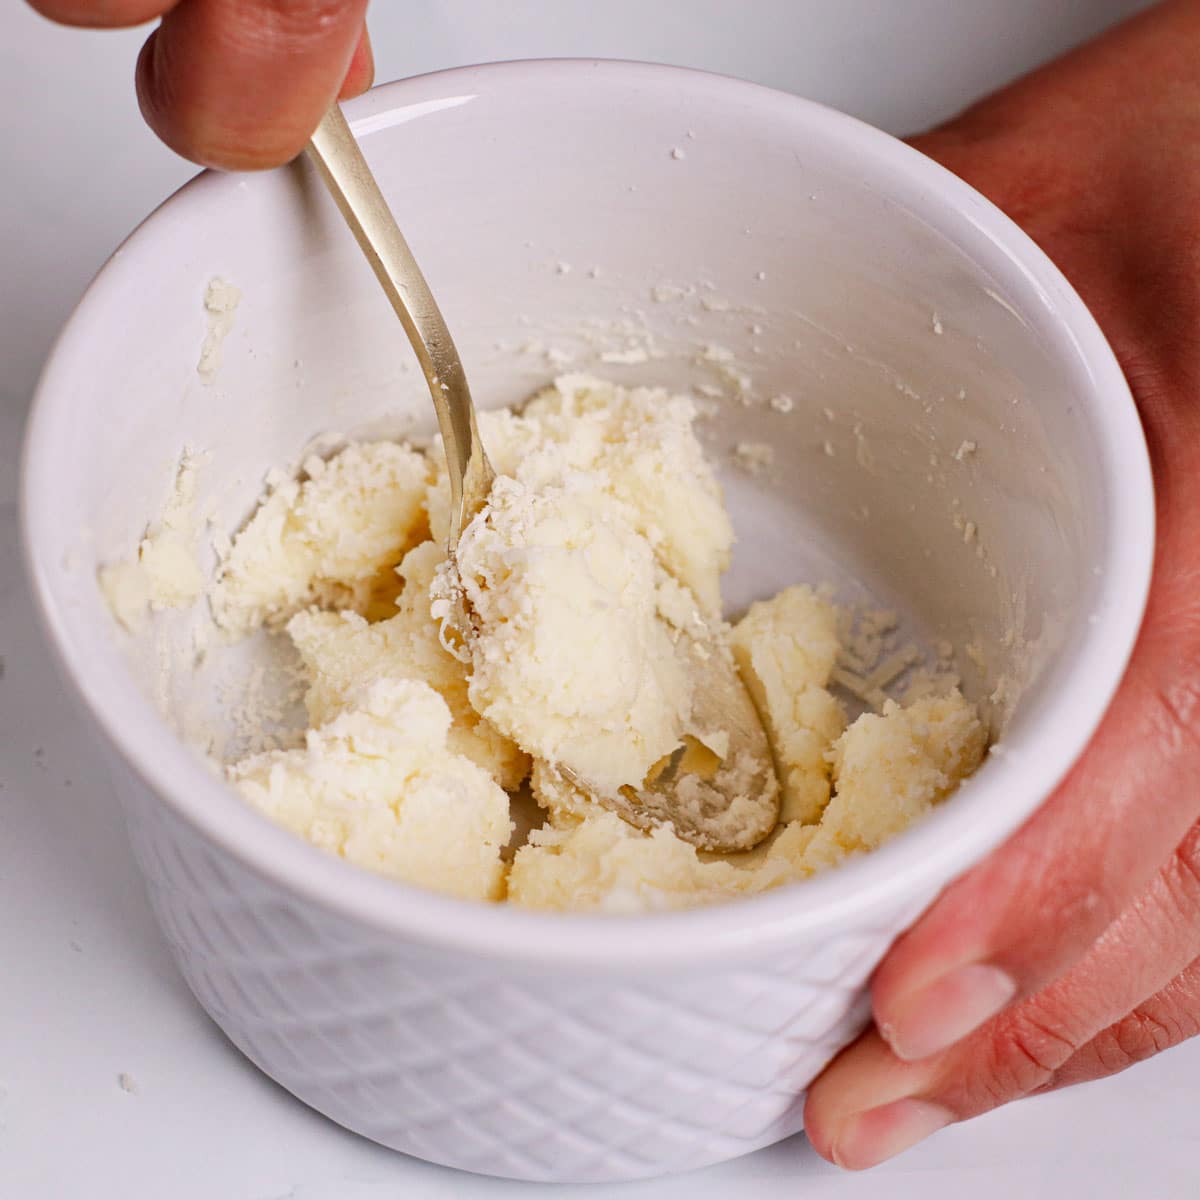 Butter parmesan spread